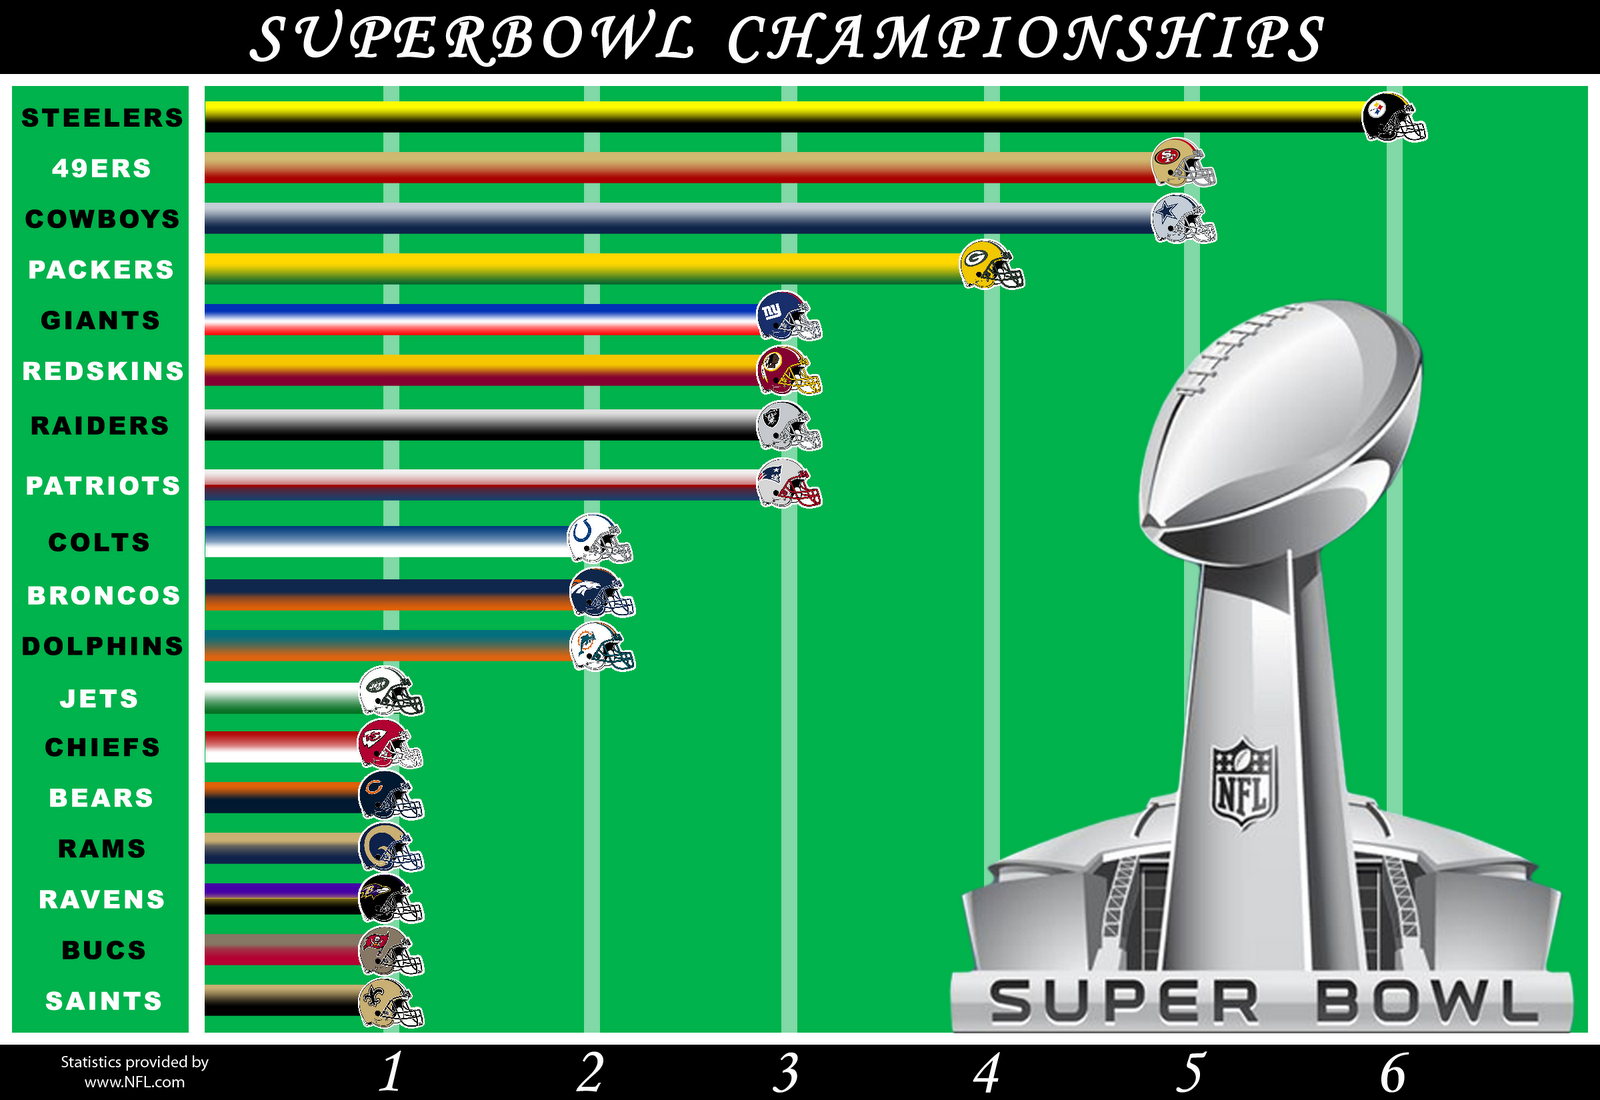 How many Super Bowls has each team won?